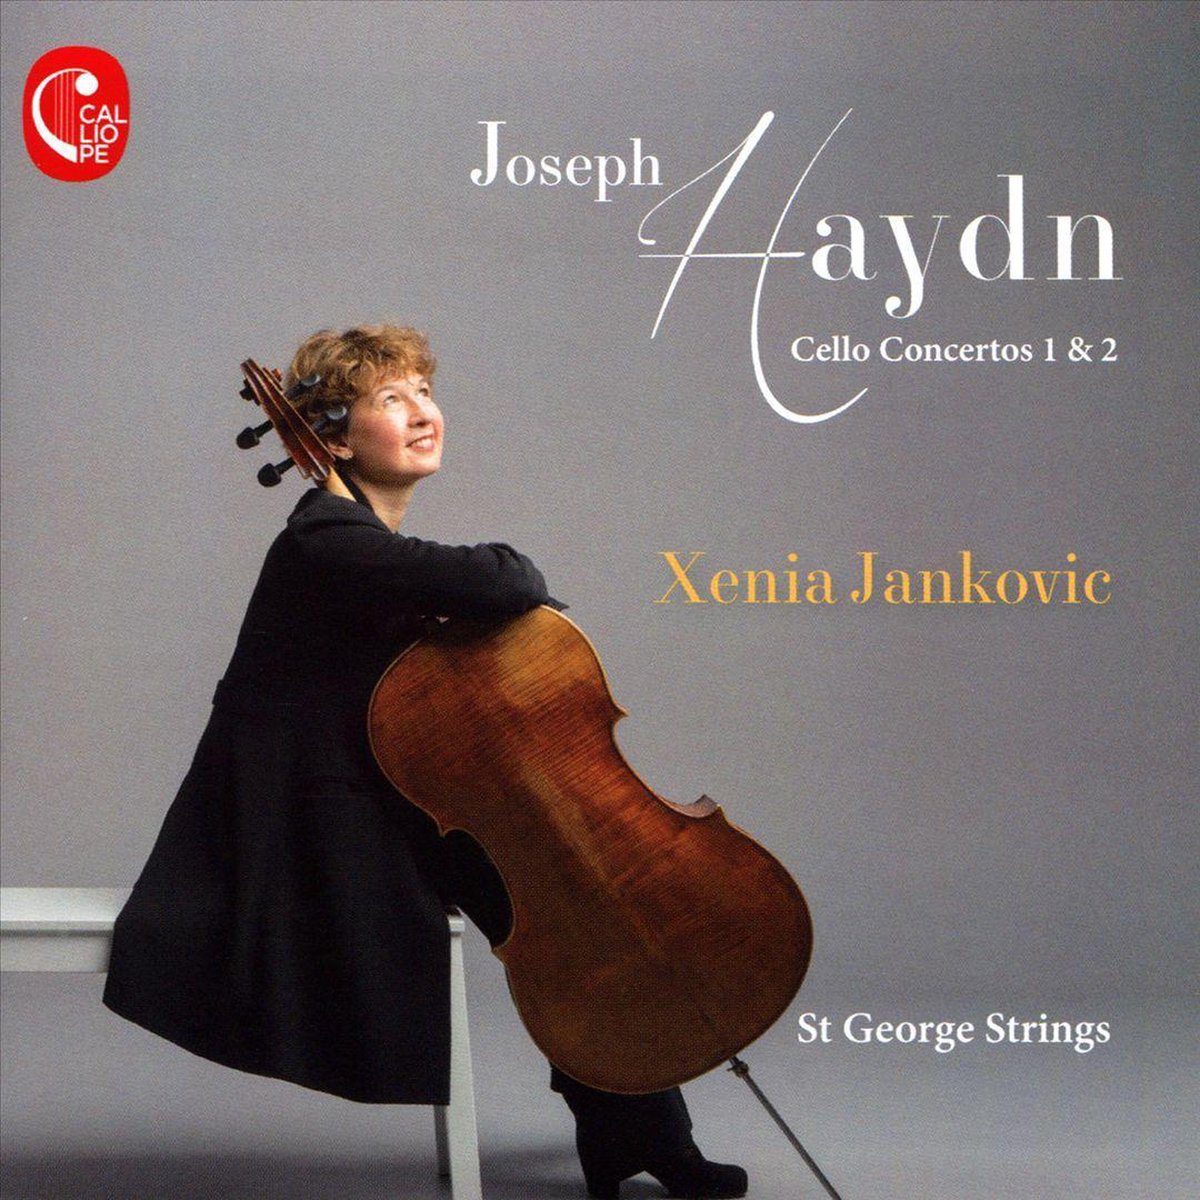 Joseph Haydn: Cello Concertos 1 & 2 - XENIA JANKOVIC